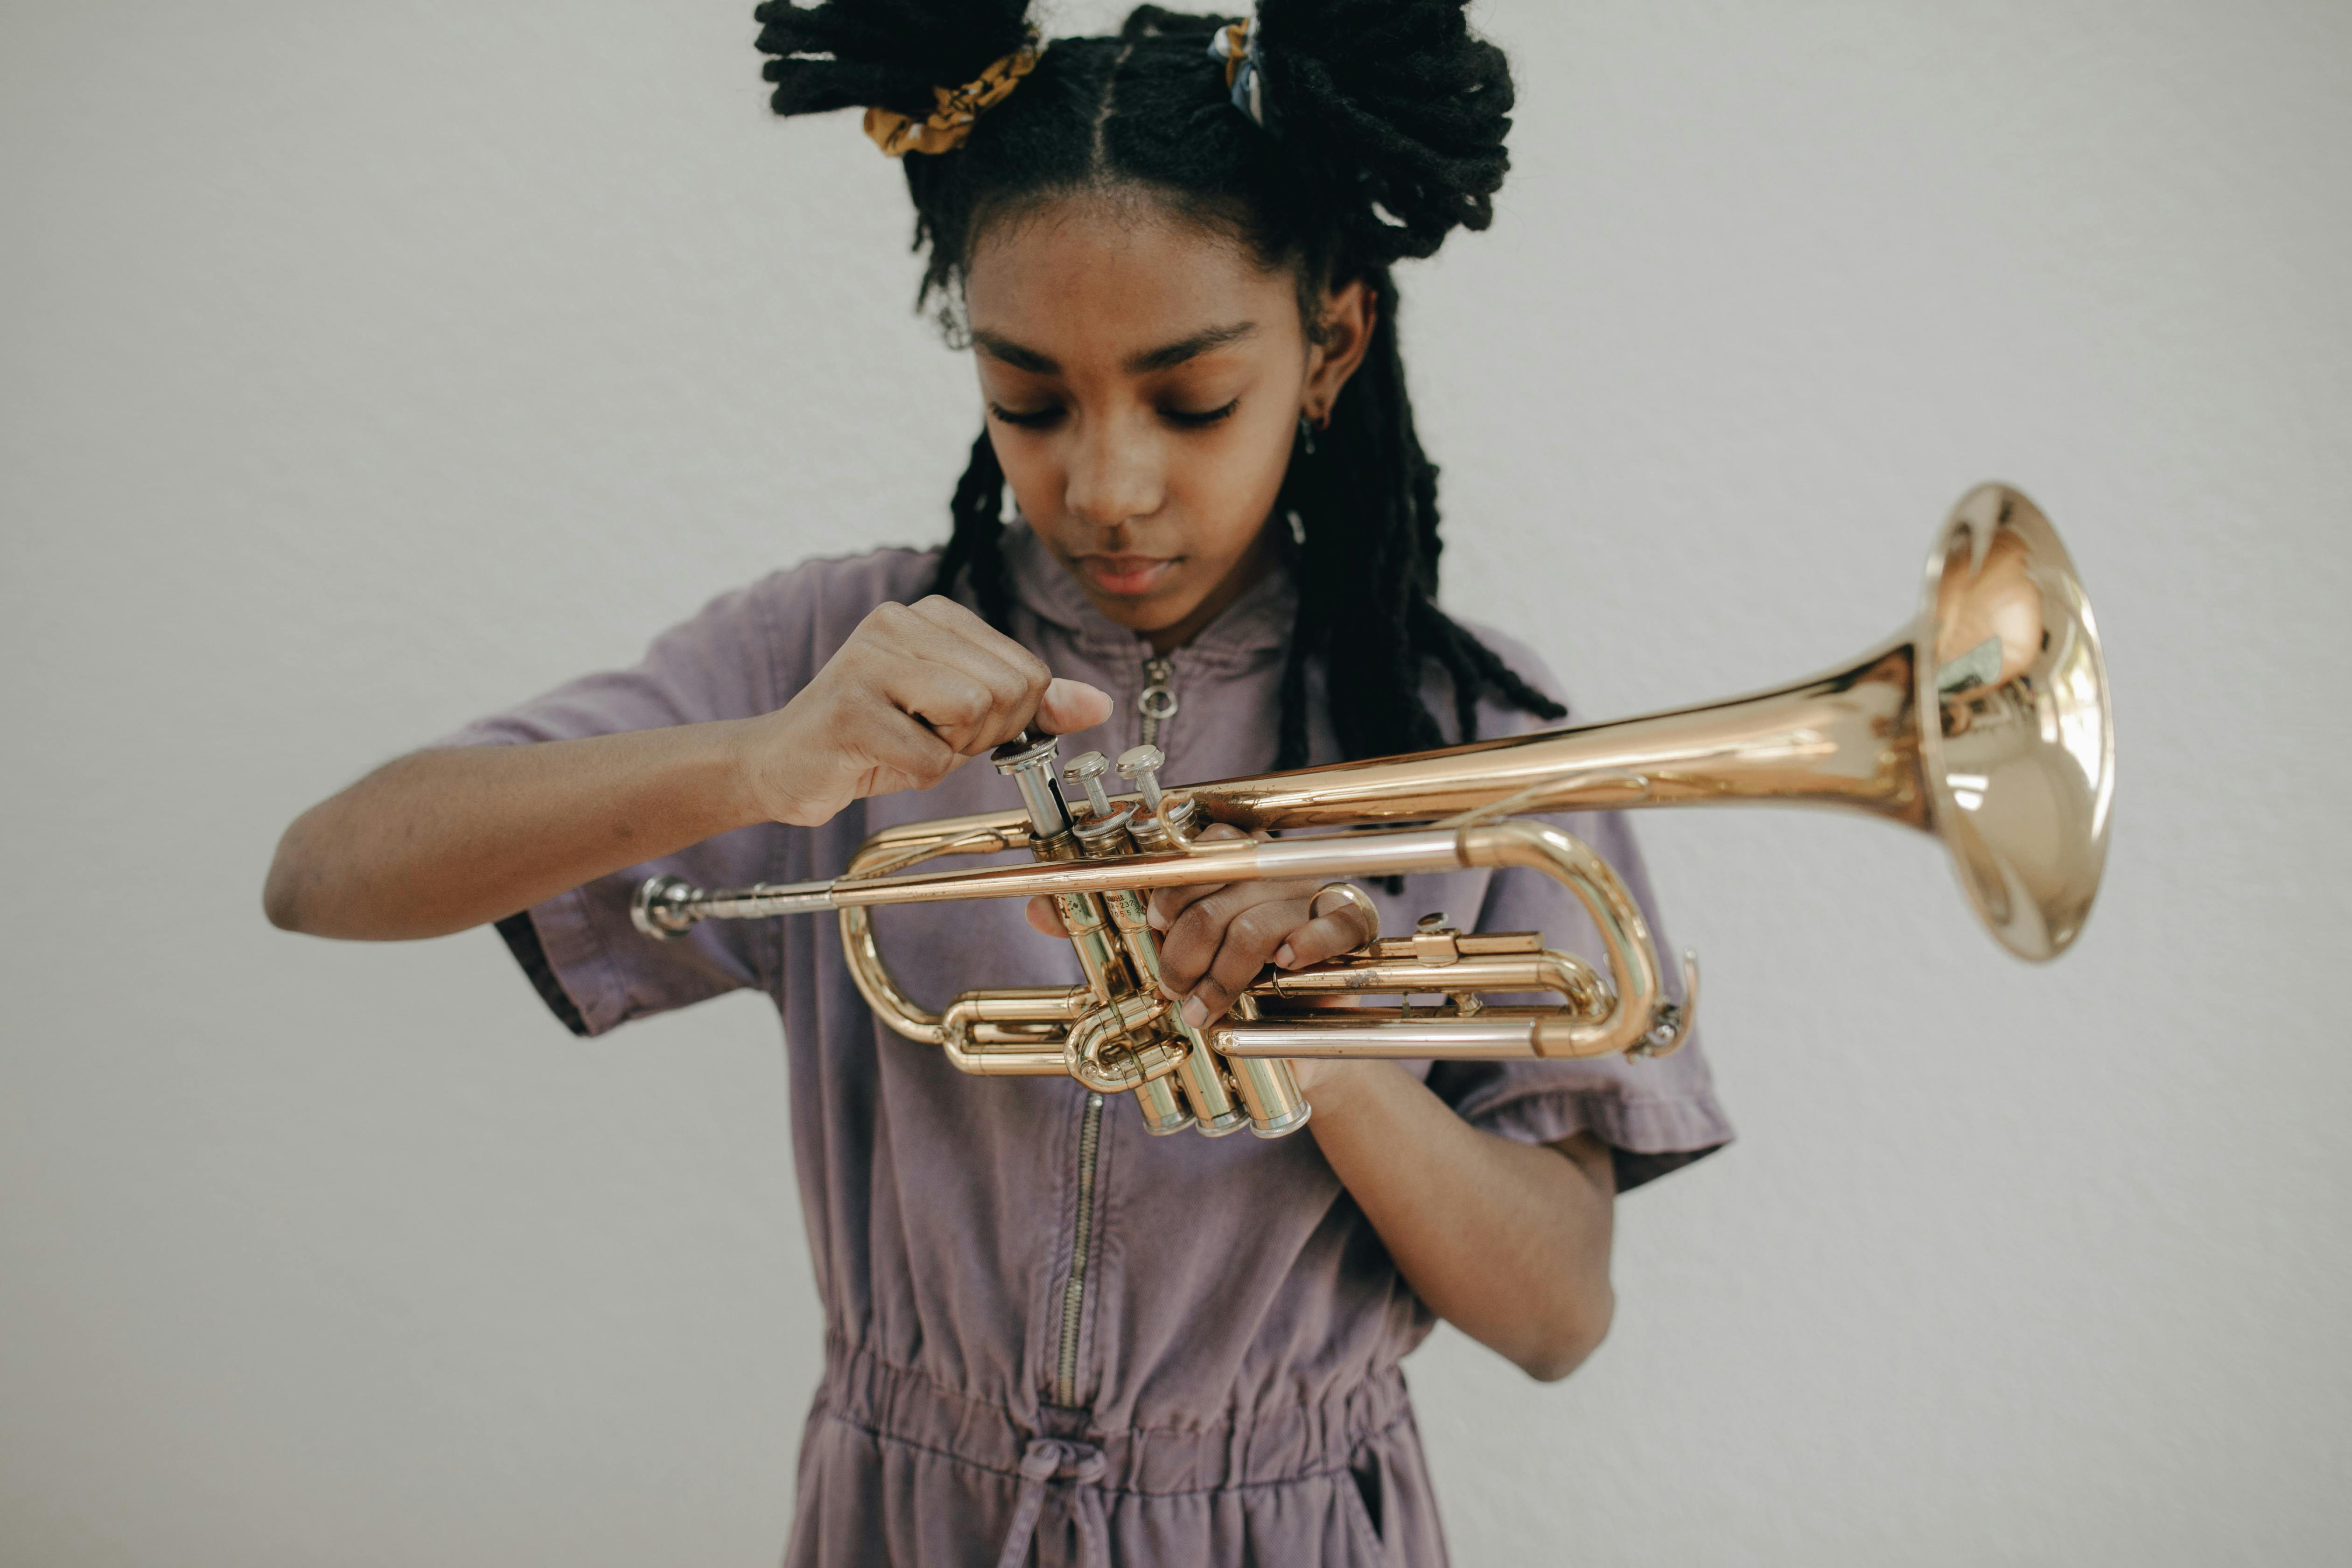 1,217 Girl Playing Trumpet Stock Photos - Free & Royalty-Free